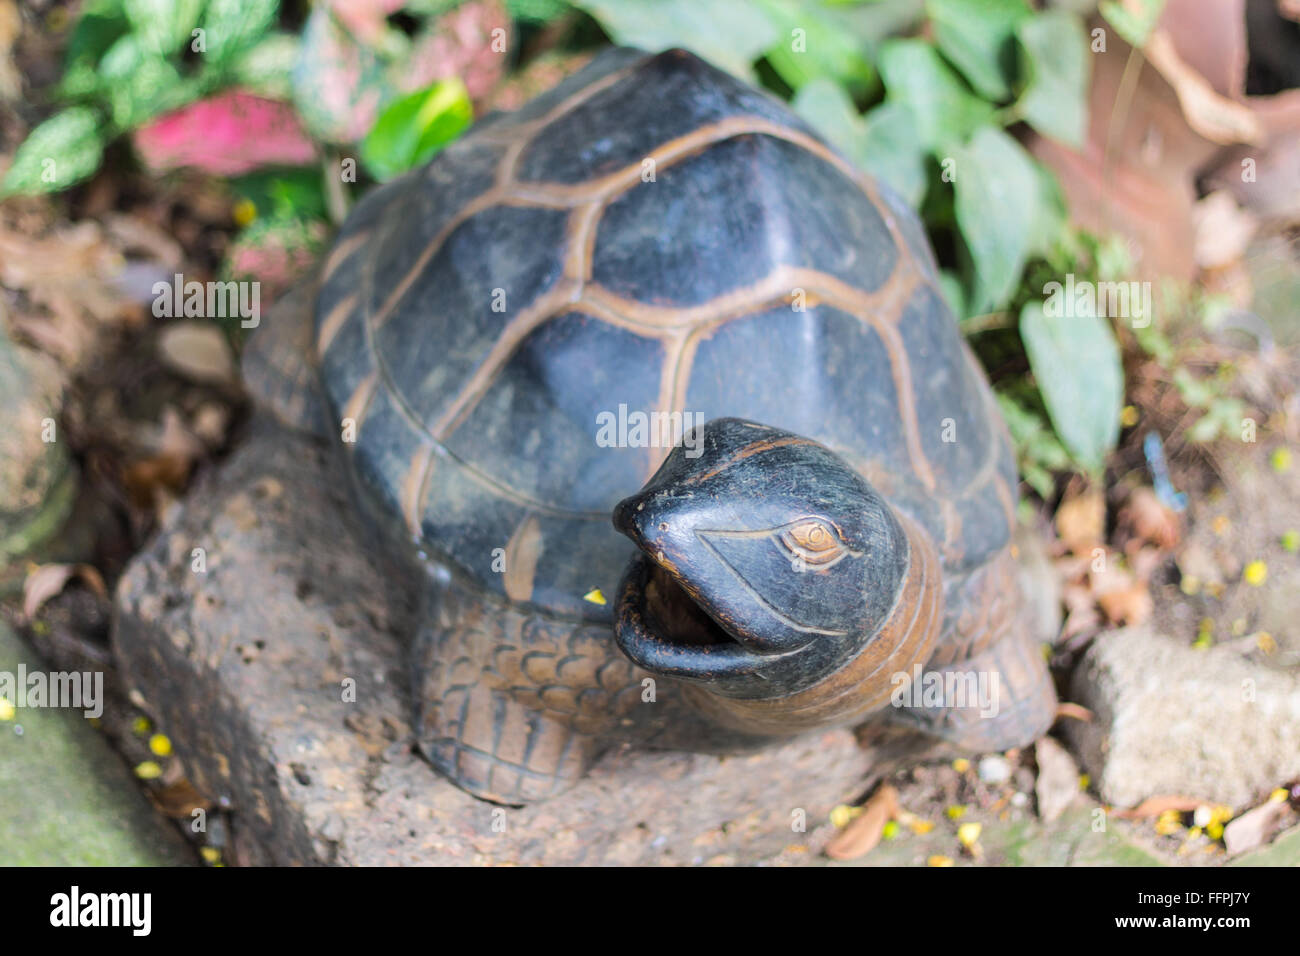 Turtle statue in the garden Stock Photo